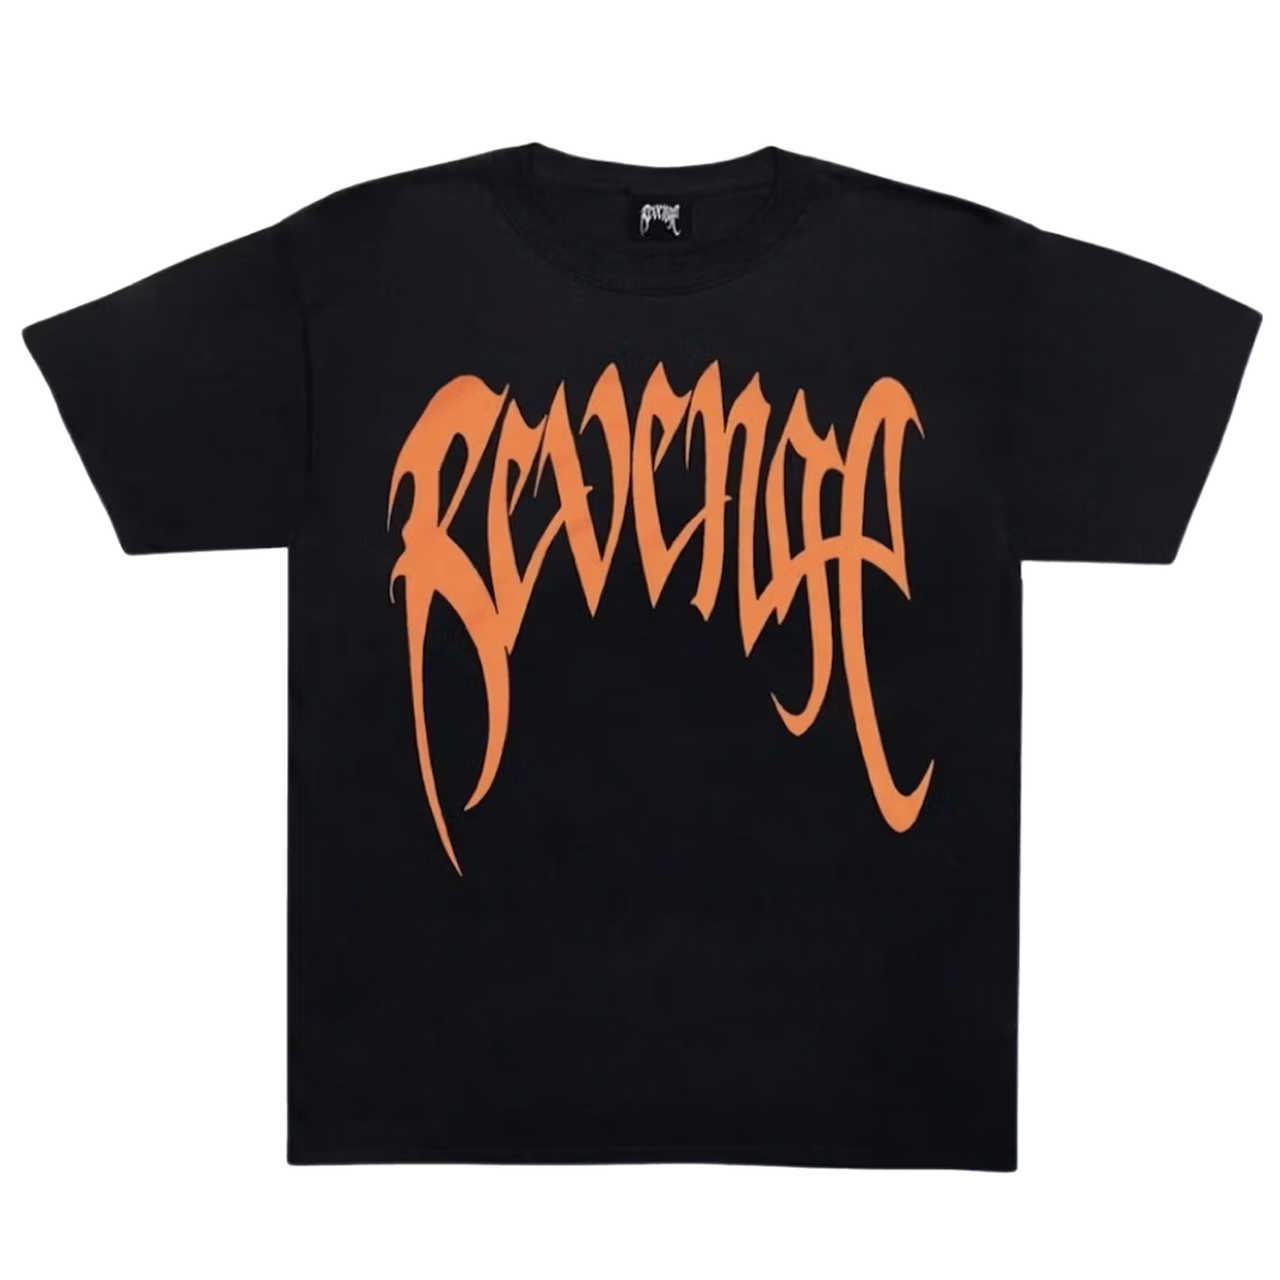 Revenge Arch Logo Tee Black Orange